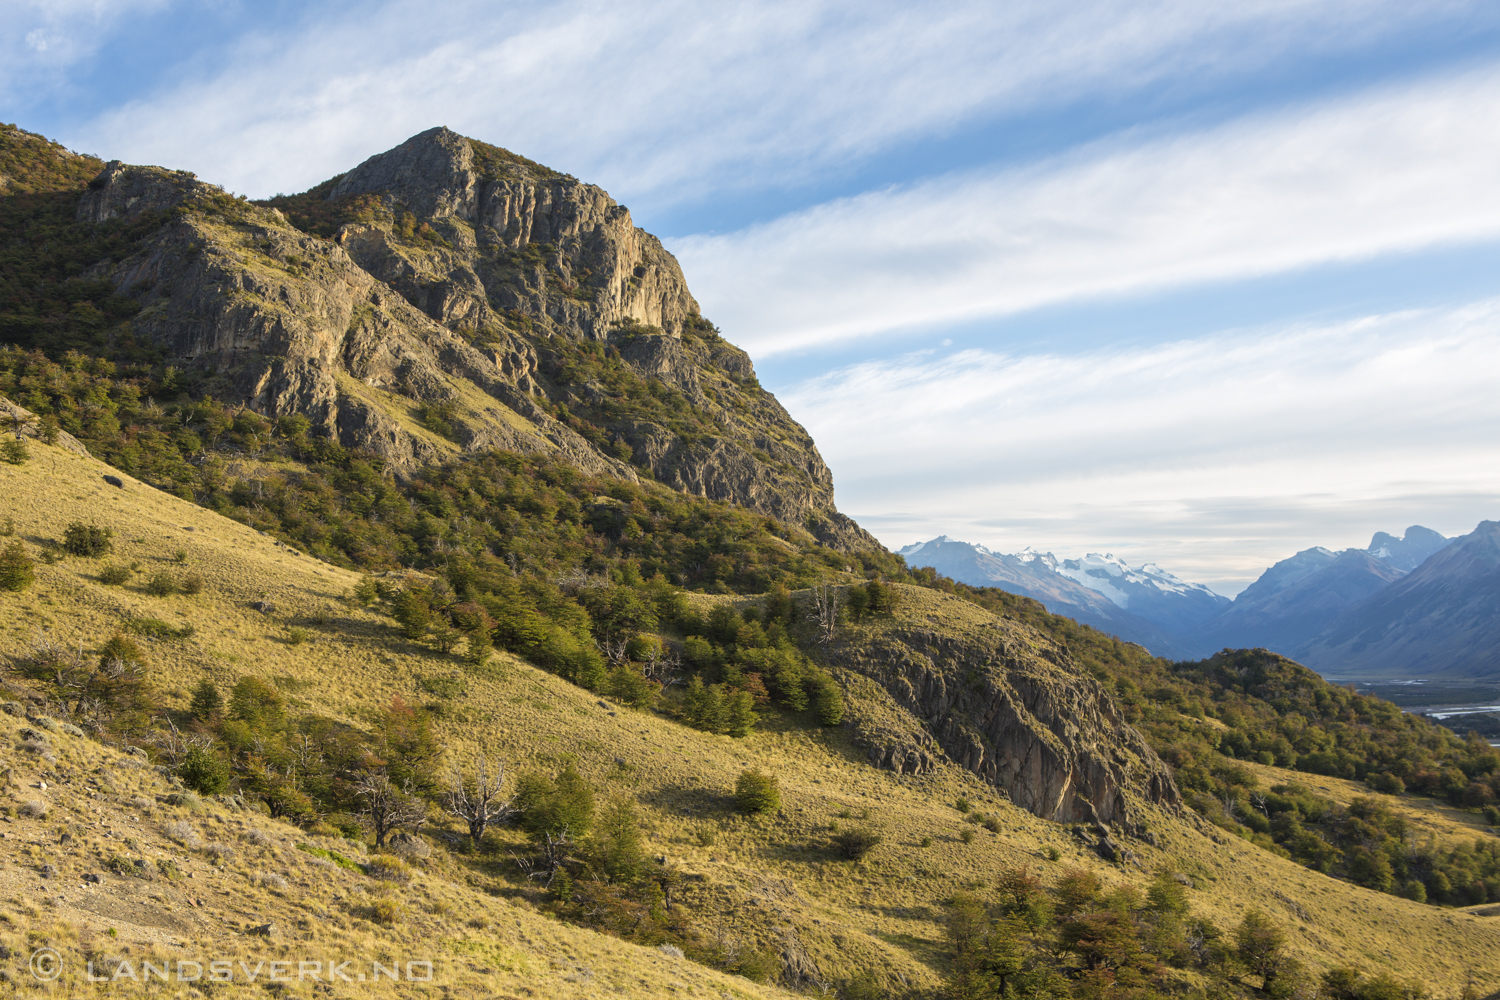 Hiking in El Chalten, Argentina. 

(Canon EOS 5D Mark III / Canon EF 24-70mm f/2.8 L USM)